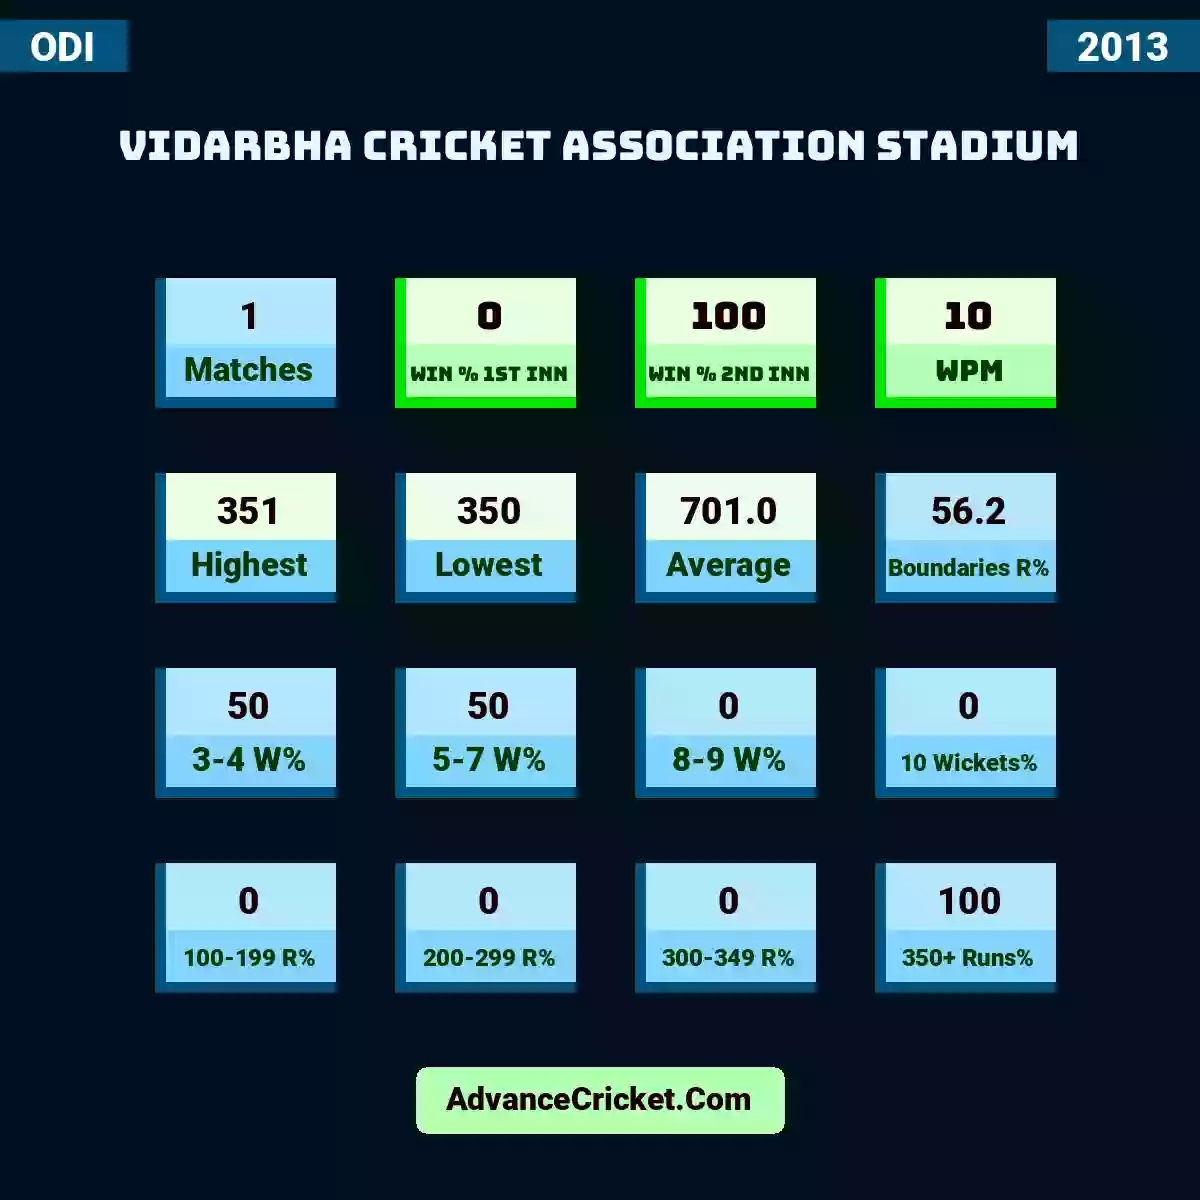 Image showing Vidarbha Cricket Association Stadium with Matches: 1, Win % 1st Inn: 0, Win % 2nd Inn: 100, WPM: 10, Highest: 351, Lowest: 350, Average: 701.0, Boundaries R%: 56.2, 3-4 W%: 50, 5-7 W%: 50, 8-9 W%: 0, 10 Wickets%: 0, 100-199 R%: 0, 200-299 R%: 0, 300-349 R%: 0, 350+ Runs%: 100.